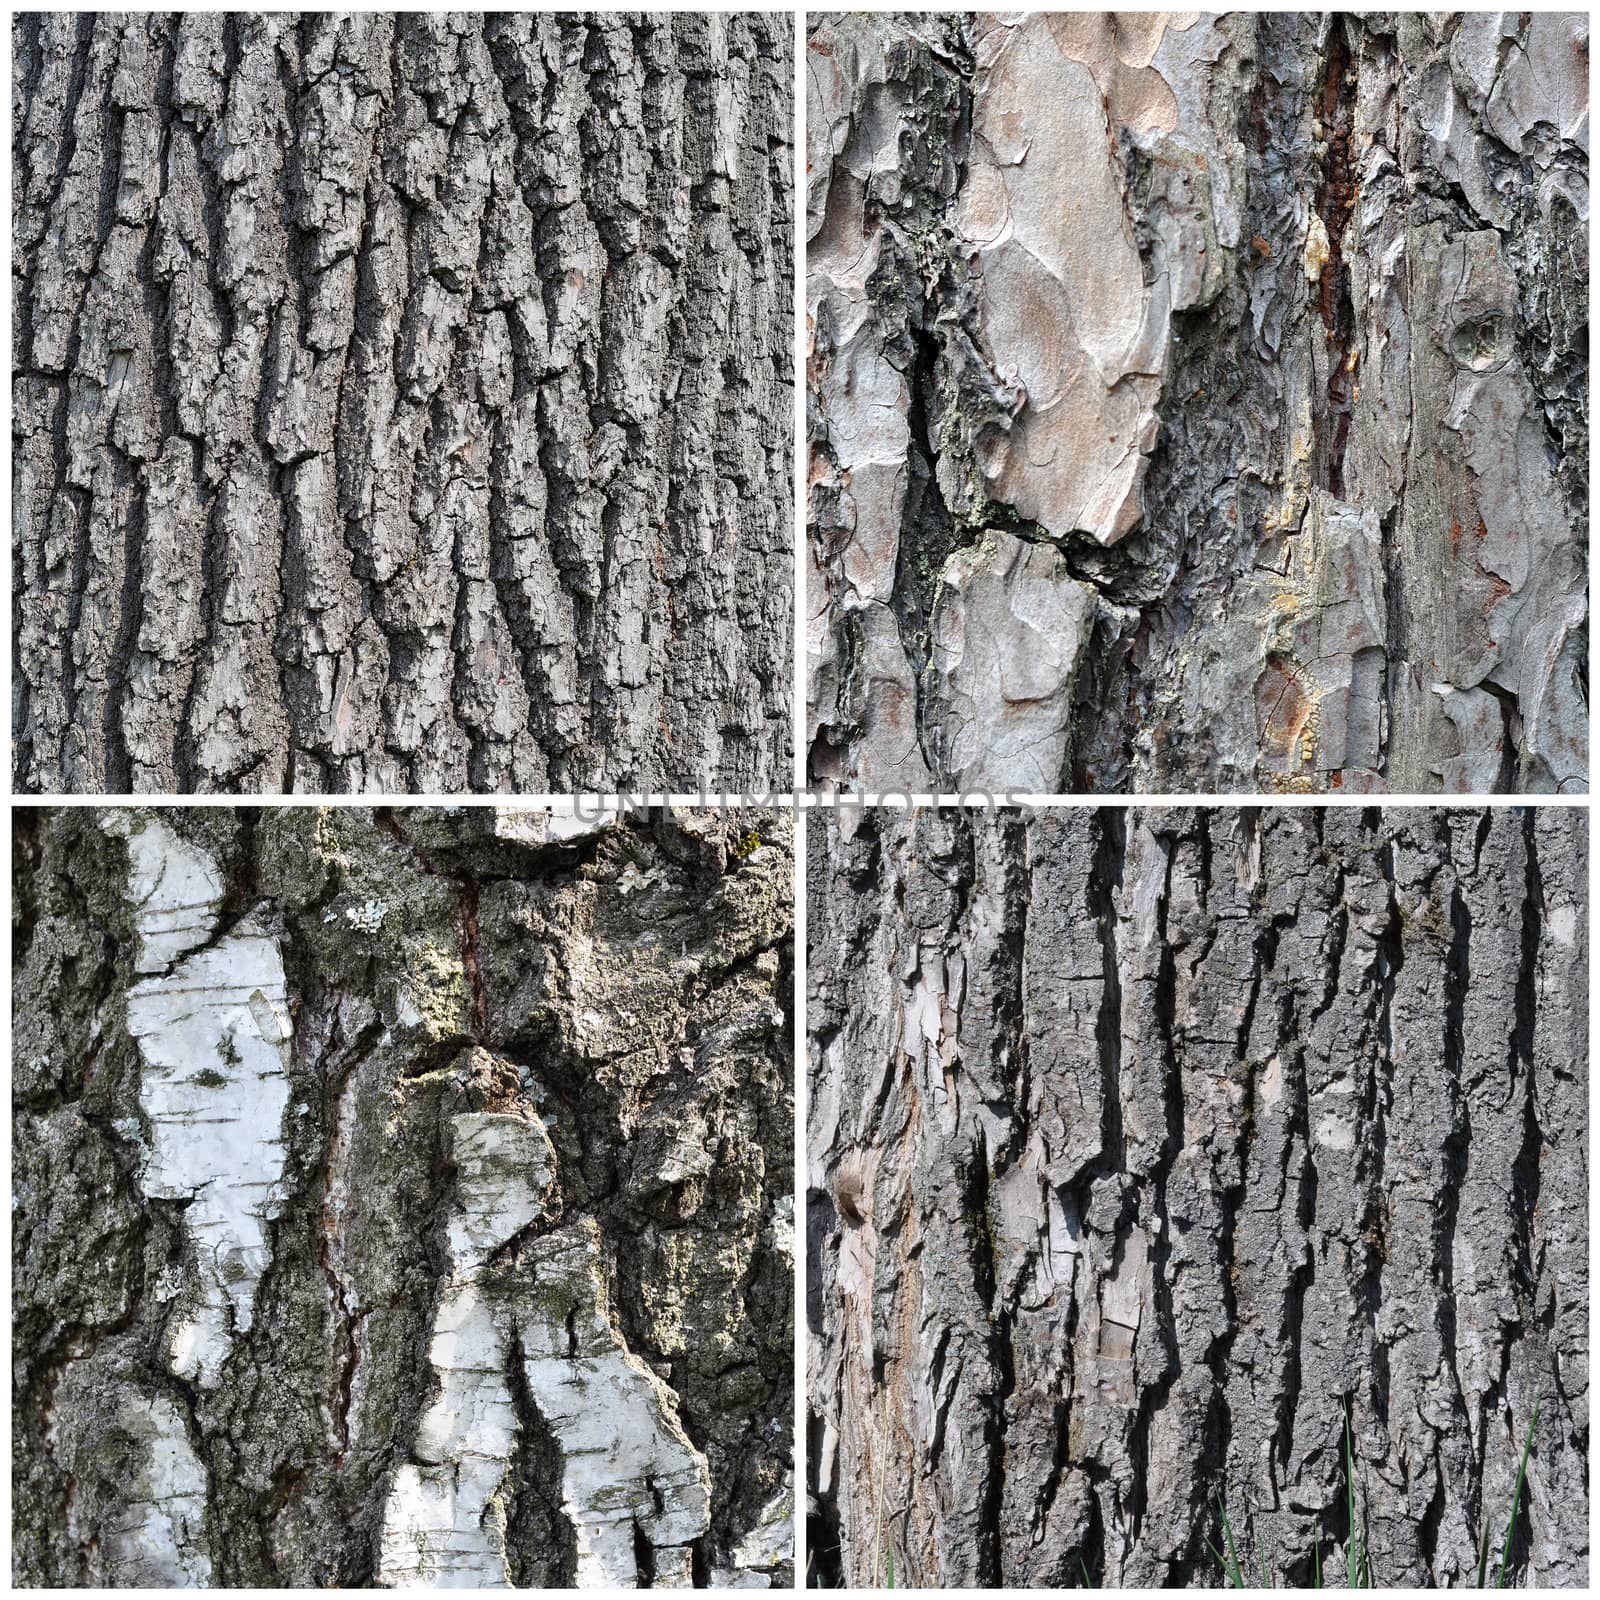 Bark of old trees of the Central Russian: oak, pine, birch, poplar